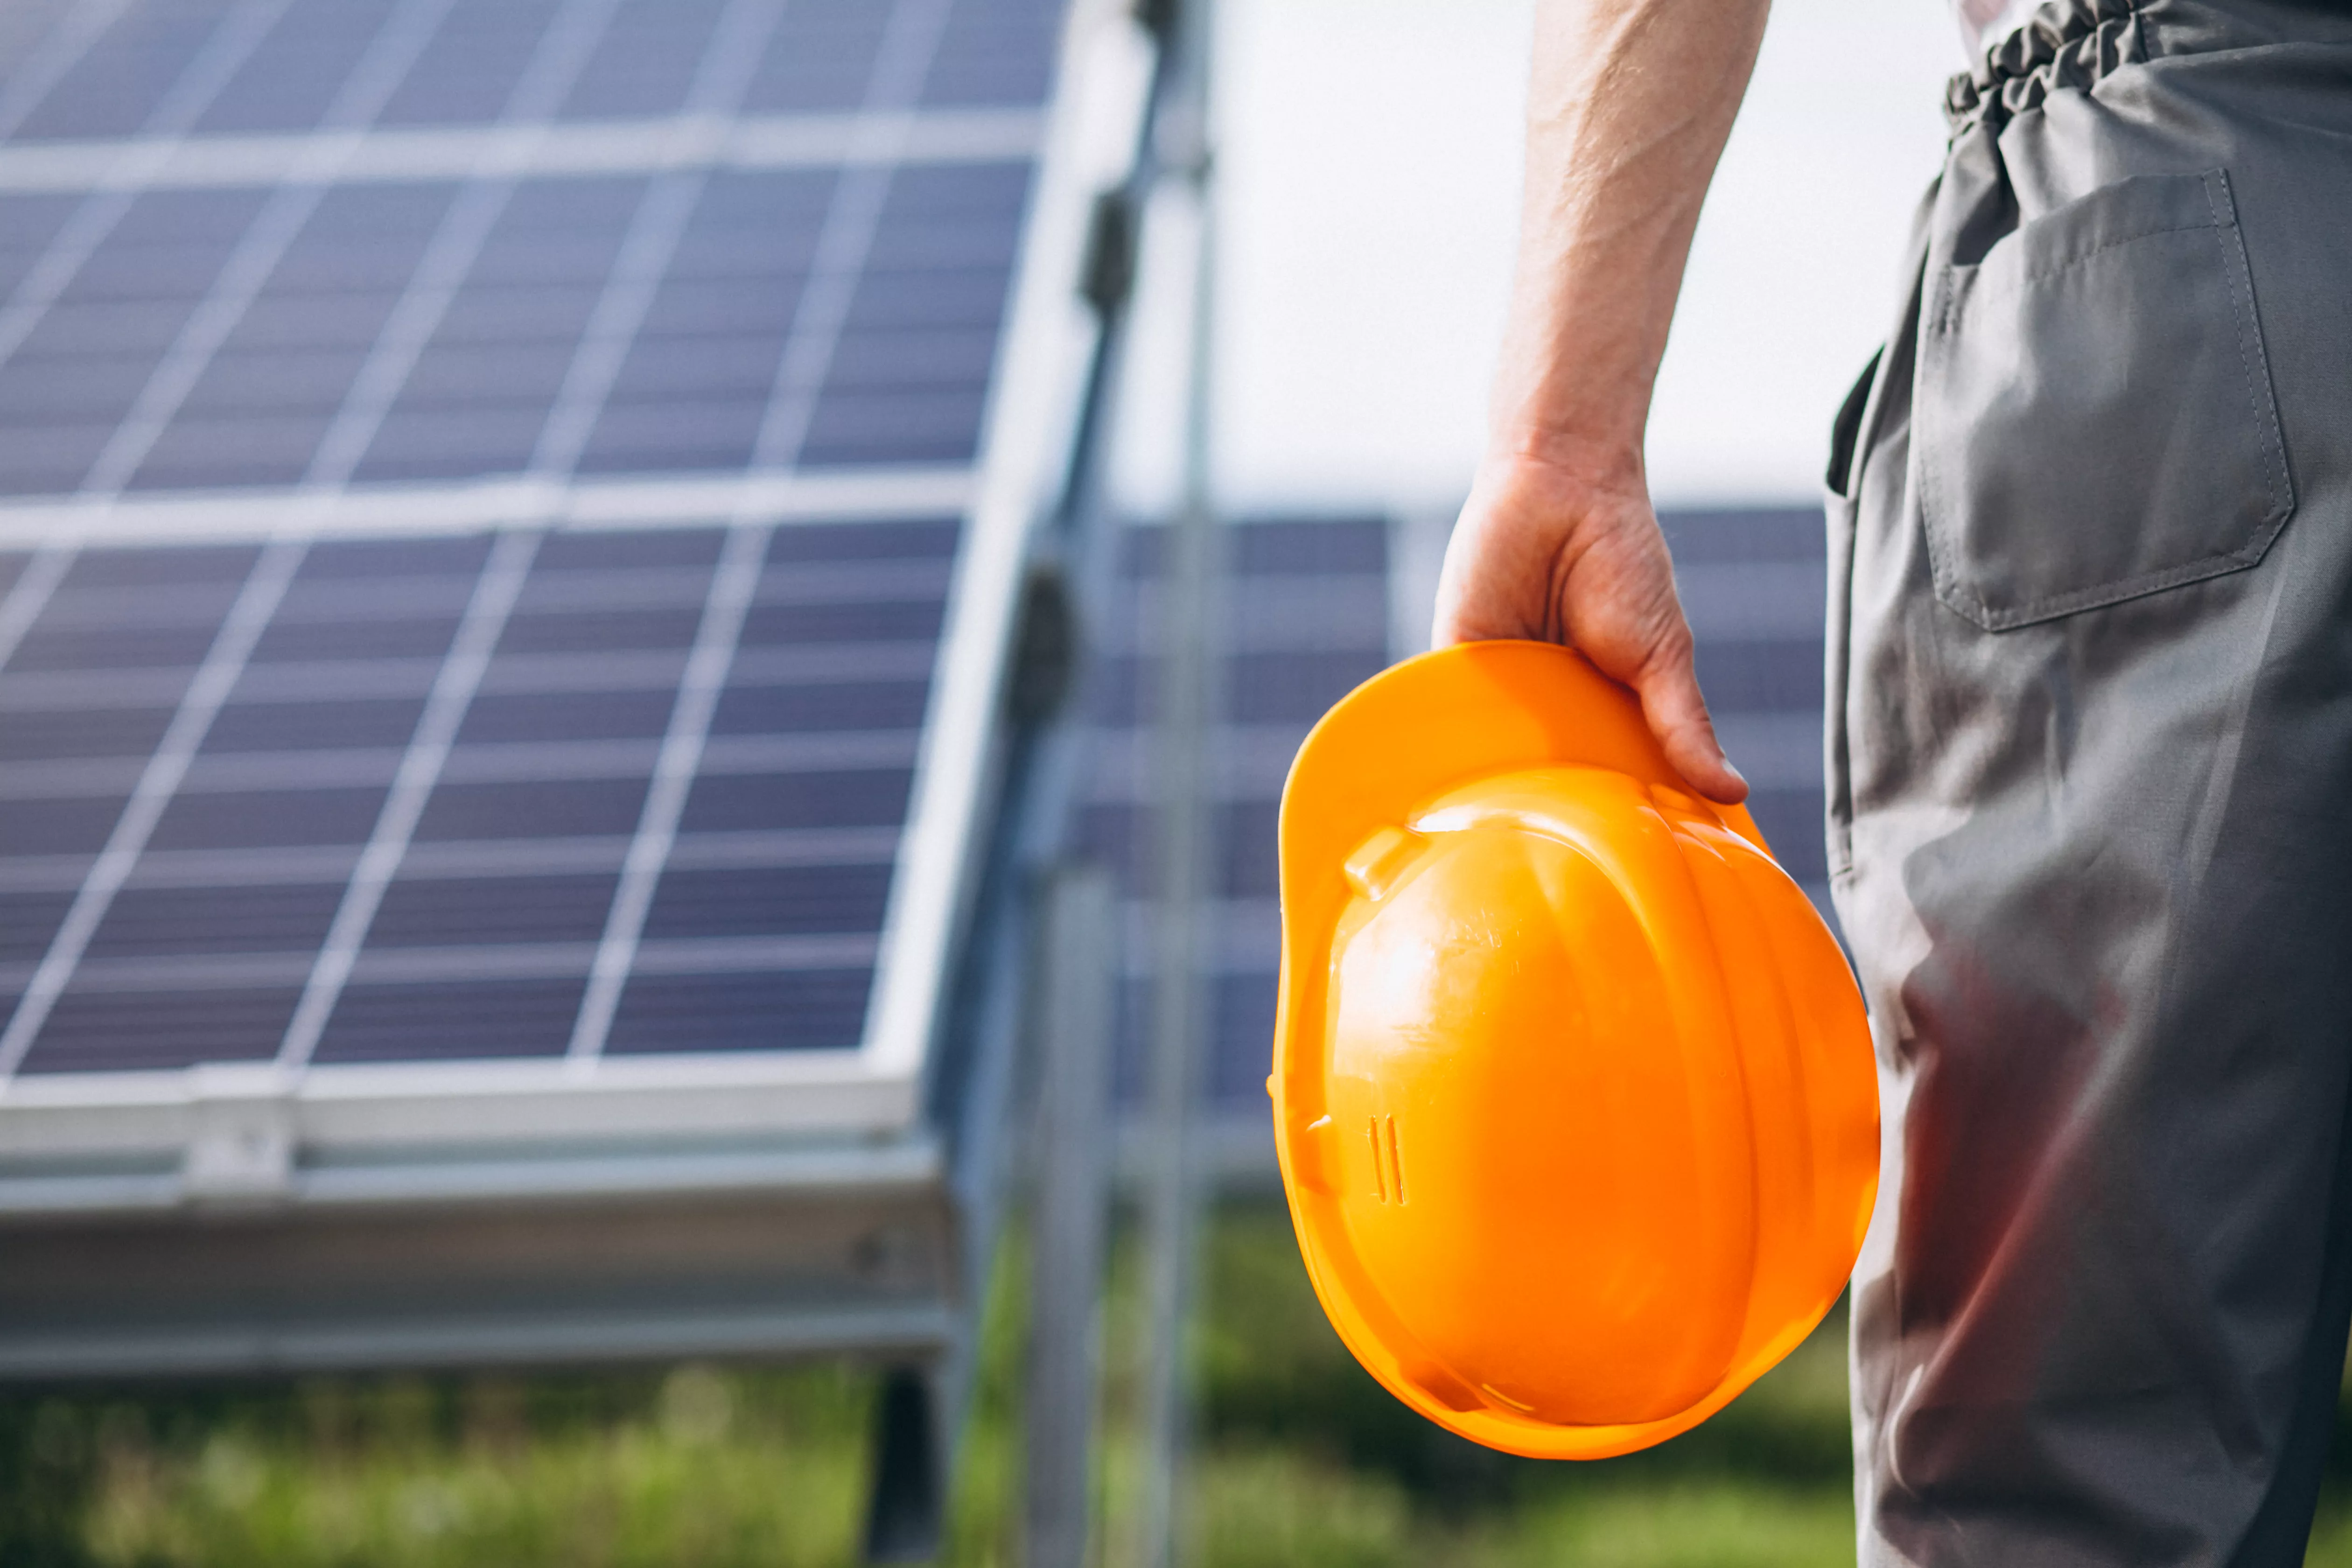 man-worker-firld-by-solar-panels.jpg